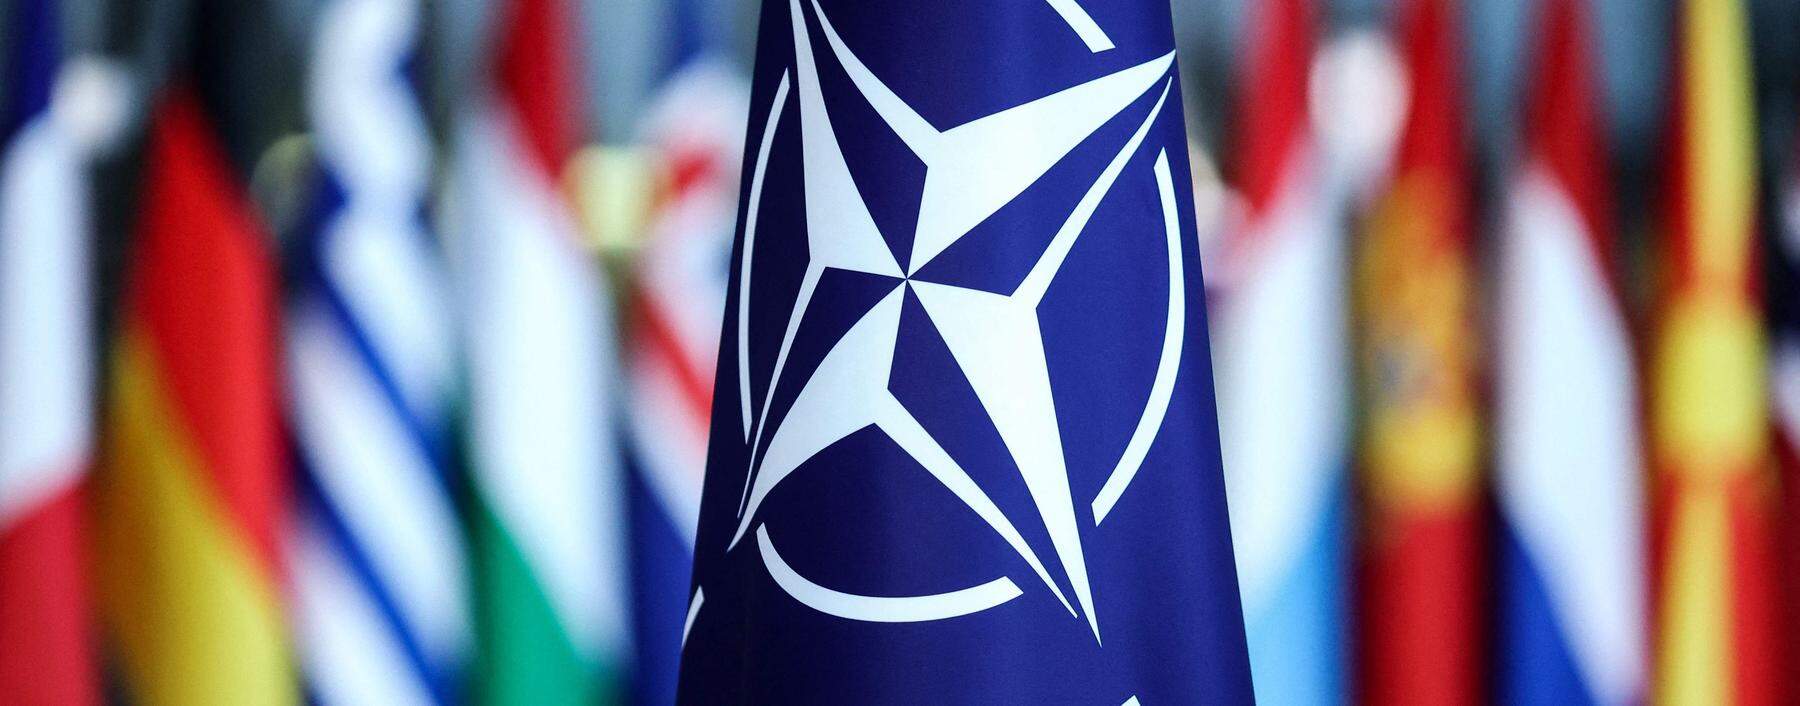 Nato-Flagge im Hauptquartier in Brüssel.